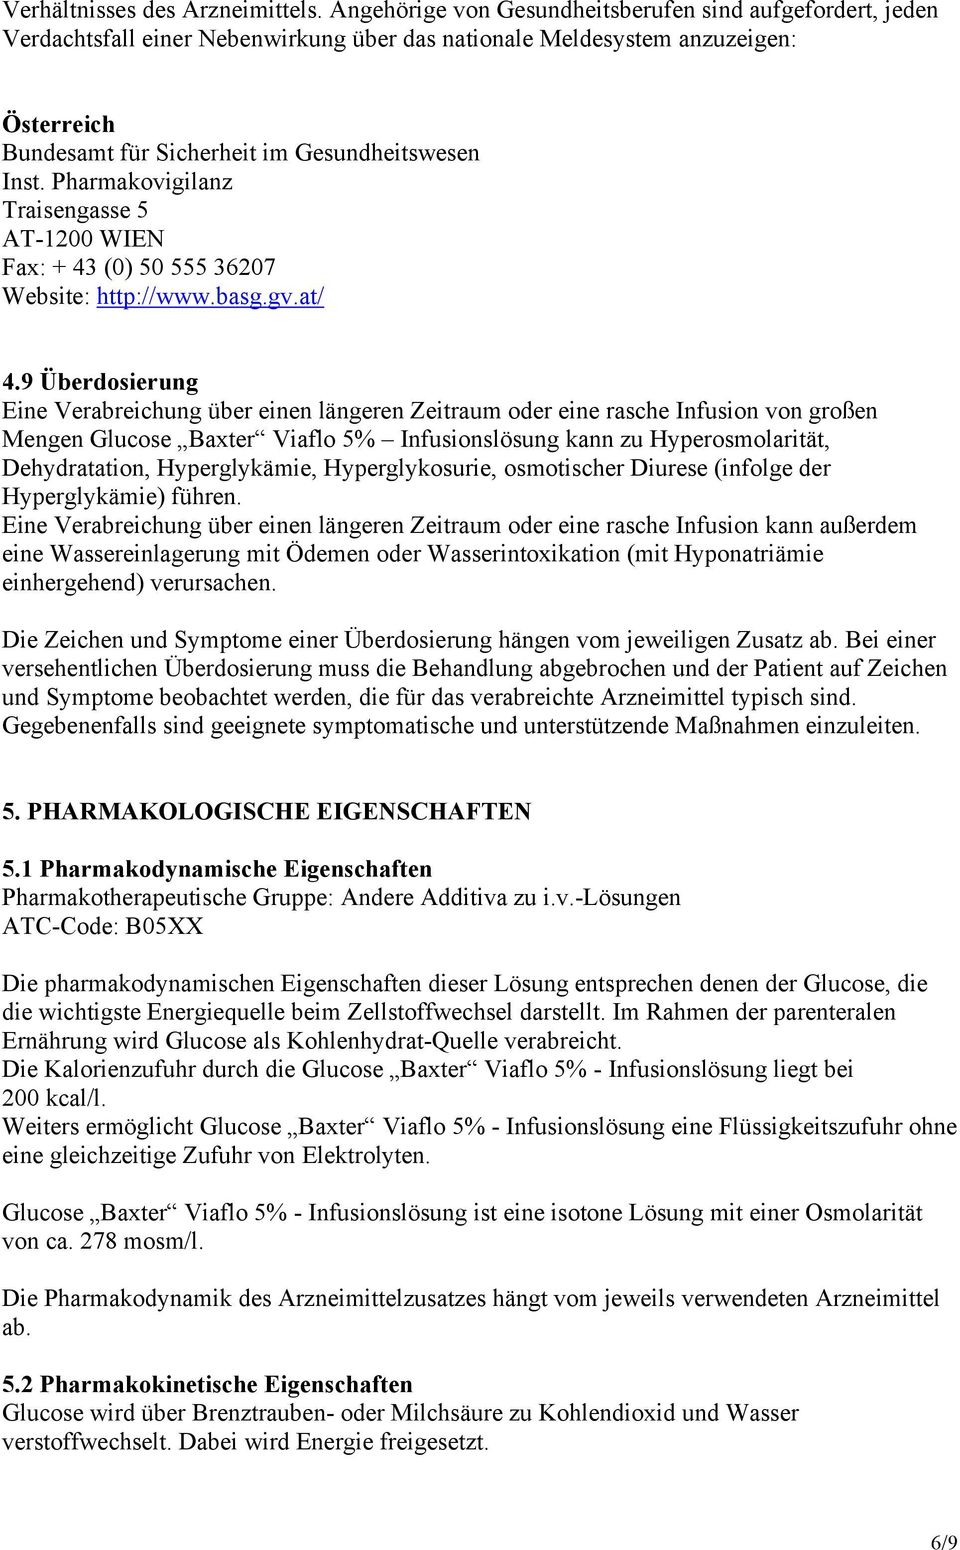 Pharmakovigilanz Traisengasse 5 AT-1200 WIEN Fax: + 43 (0) 50 555 36207 Website: http://www.basg.gv.at/ 4.